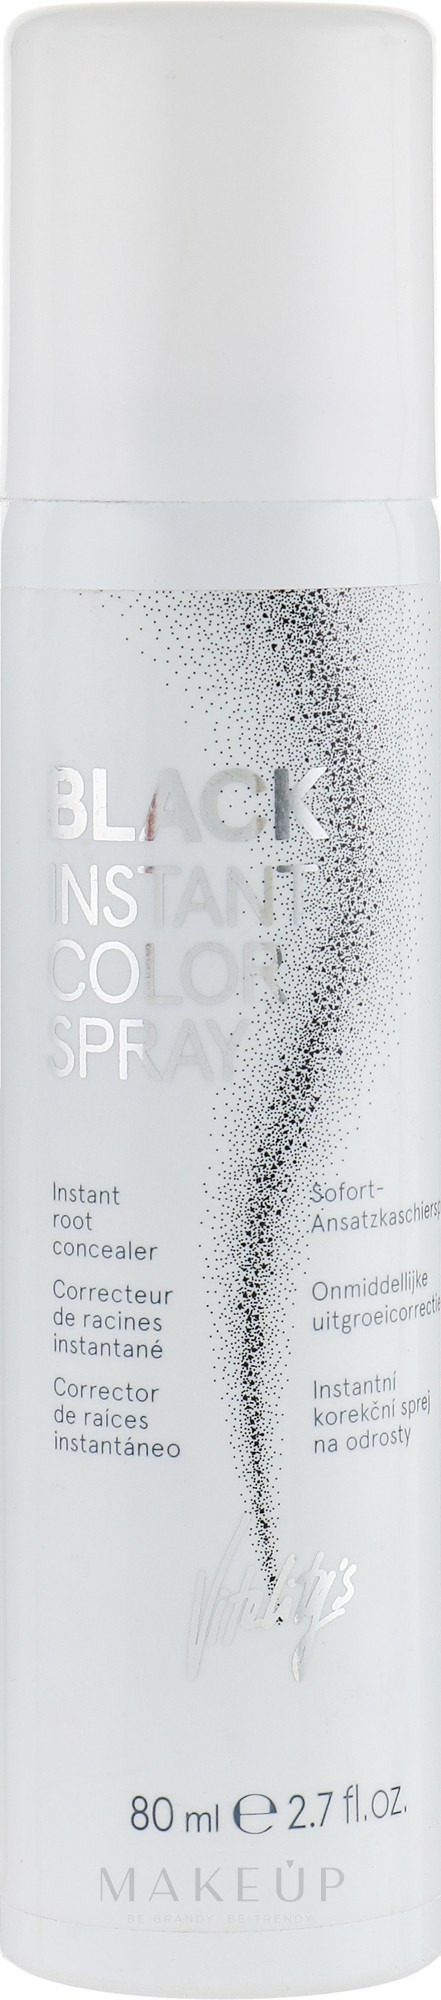 Sofort-Ansatzkaschierspray - Vitality's Instant Color Spray — Bild Black